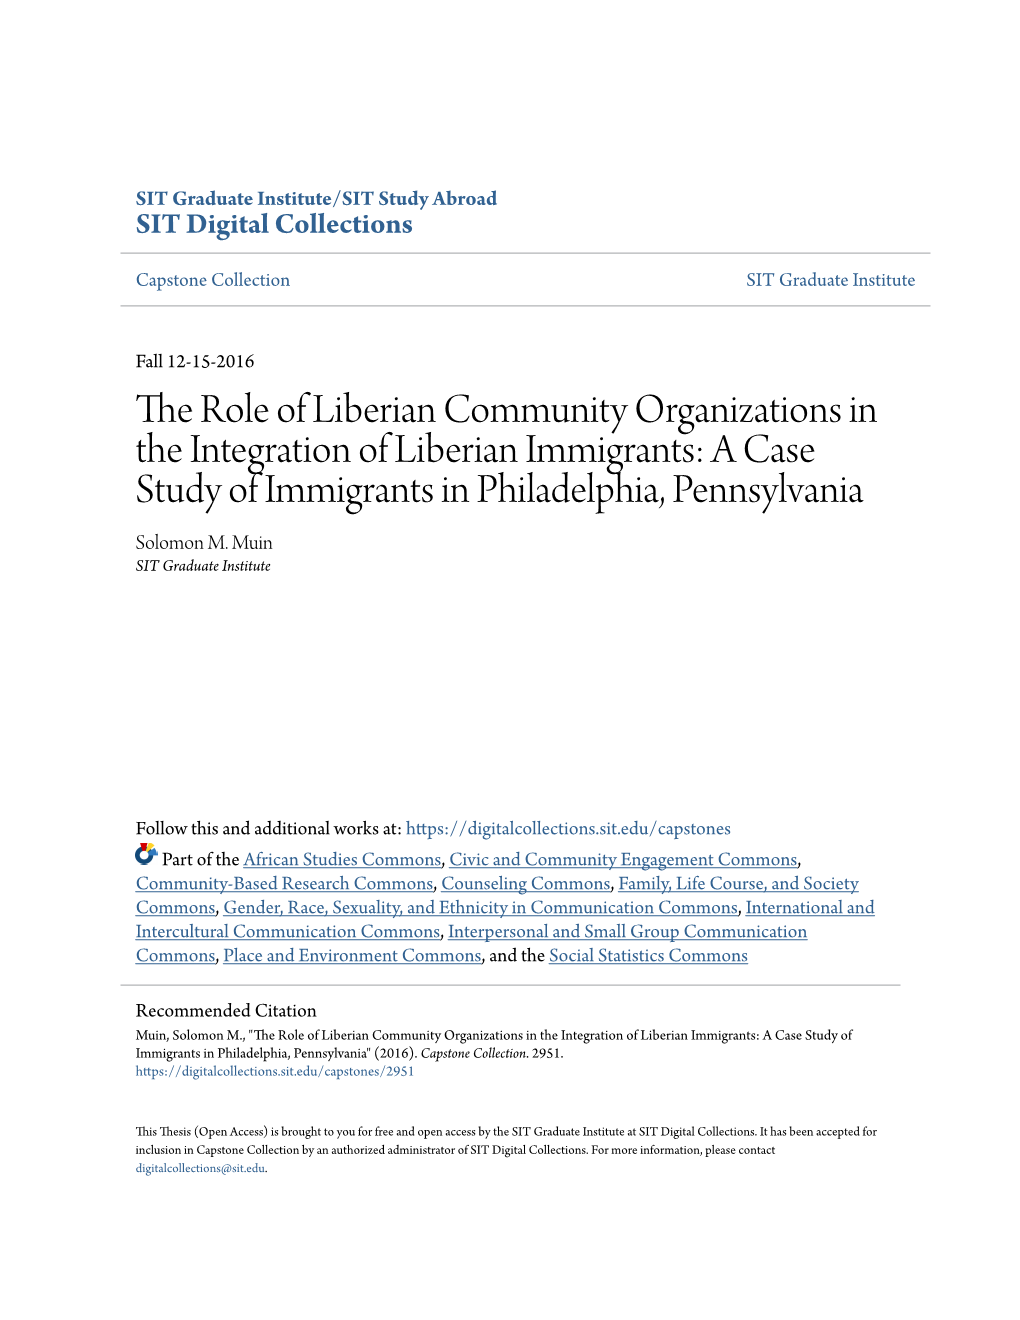 The Role of Liberian Community Organizations in the Integration of Liberian Immigrants: a Case Study of Immigrants in Philadelphia, Pennsylvania Solomon M